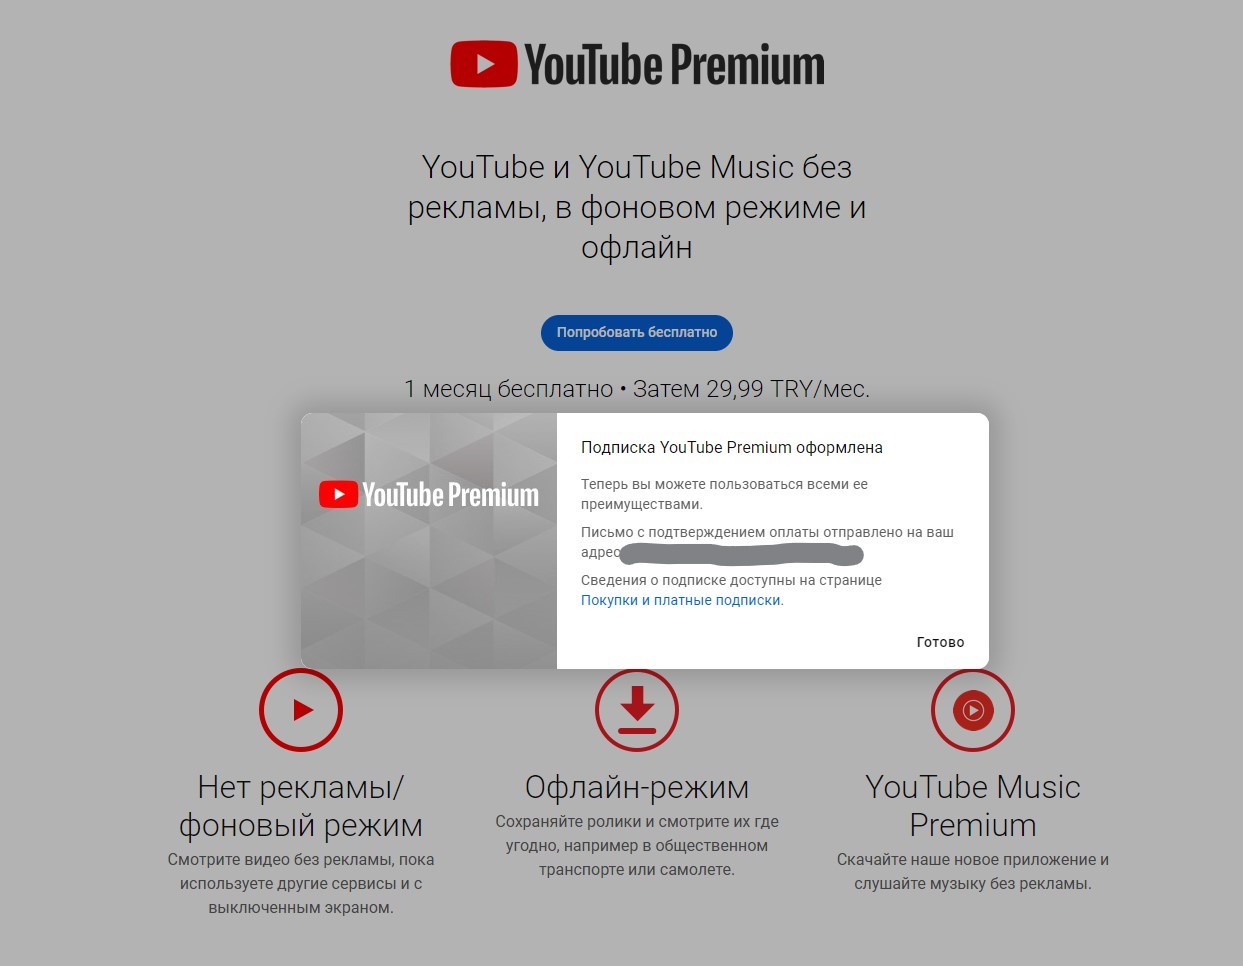 Оплатить youtube premium. Оформить подписку. Youtube Premium.